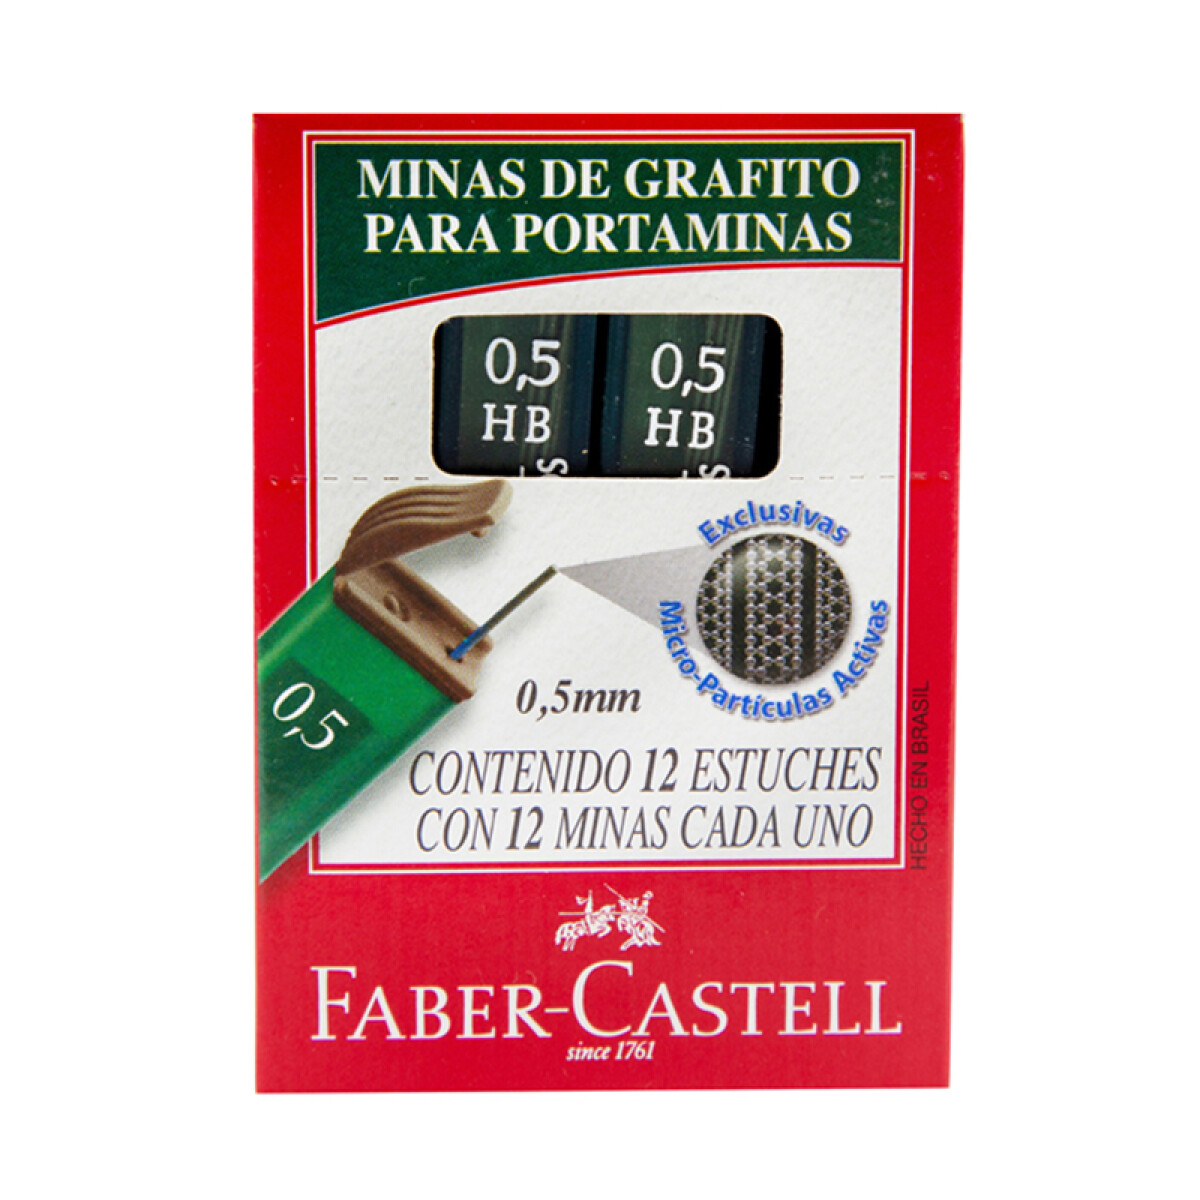 Minas FABER CASTELL - 0.5 HB x12 Unidades 